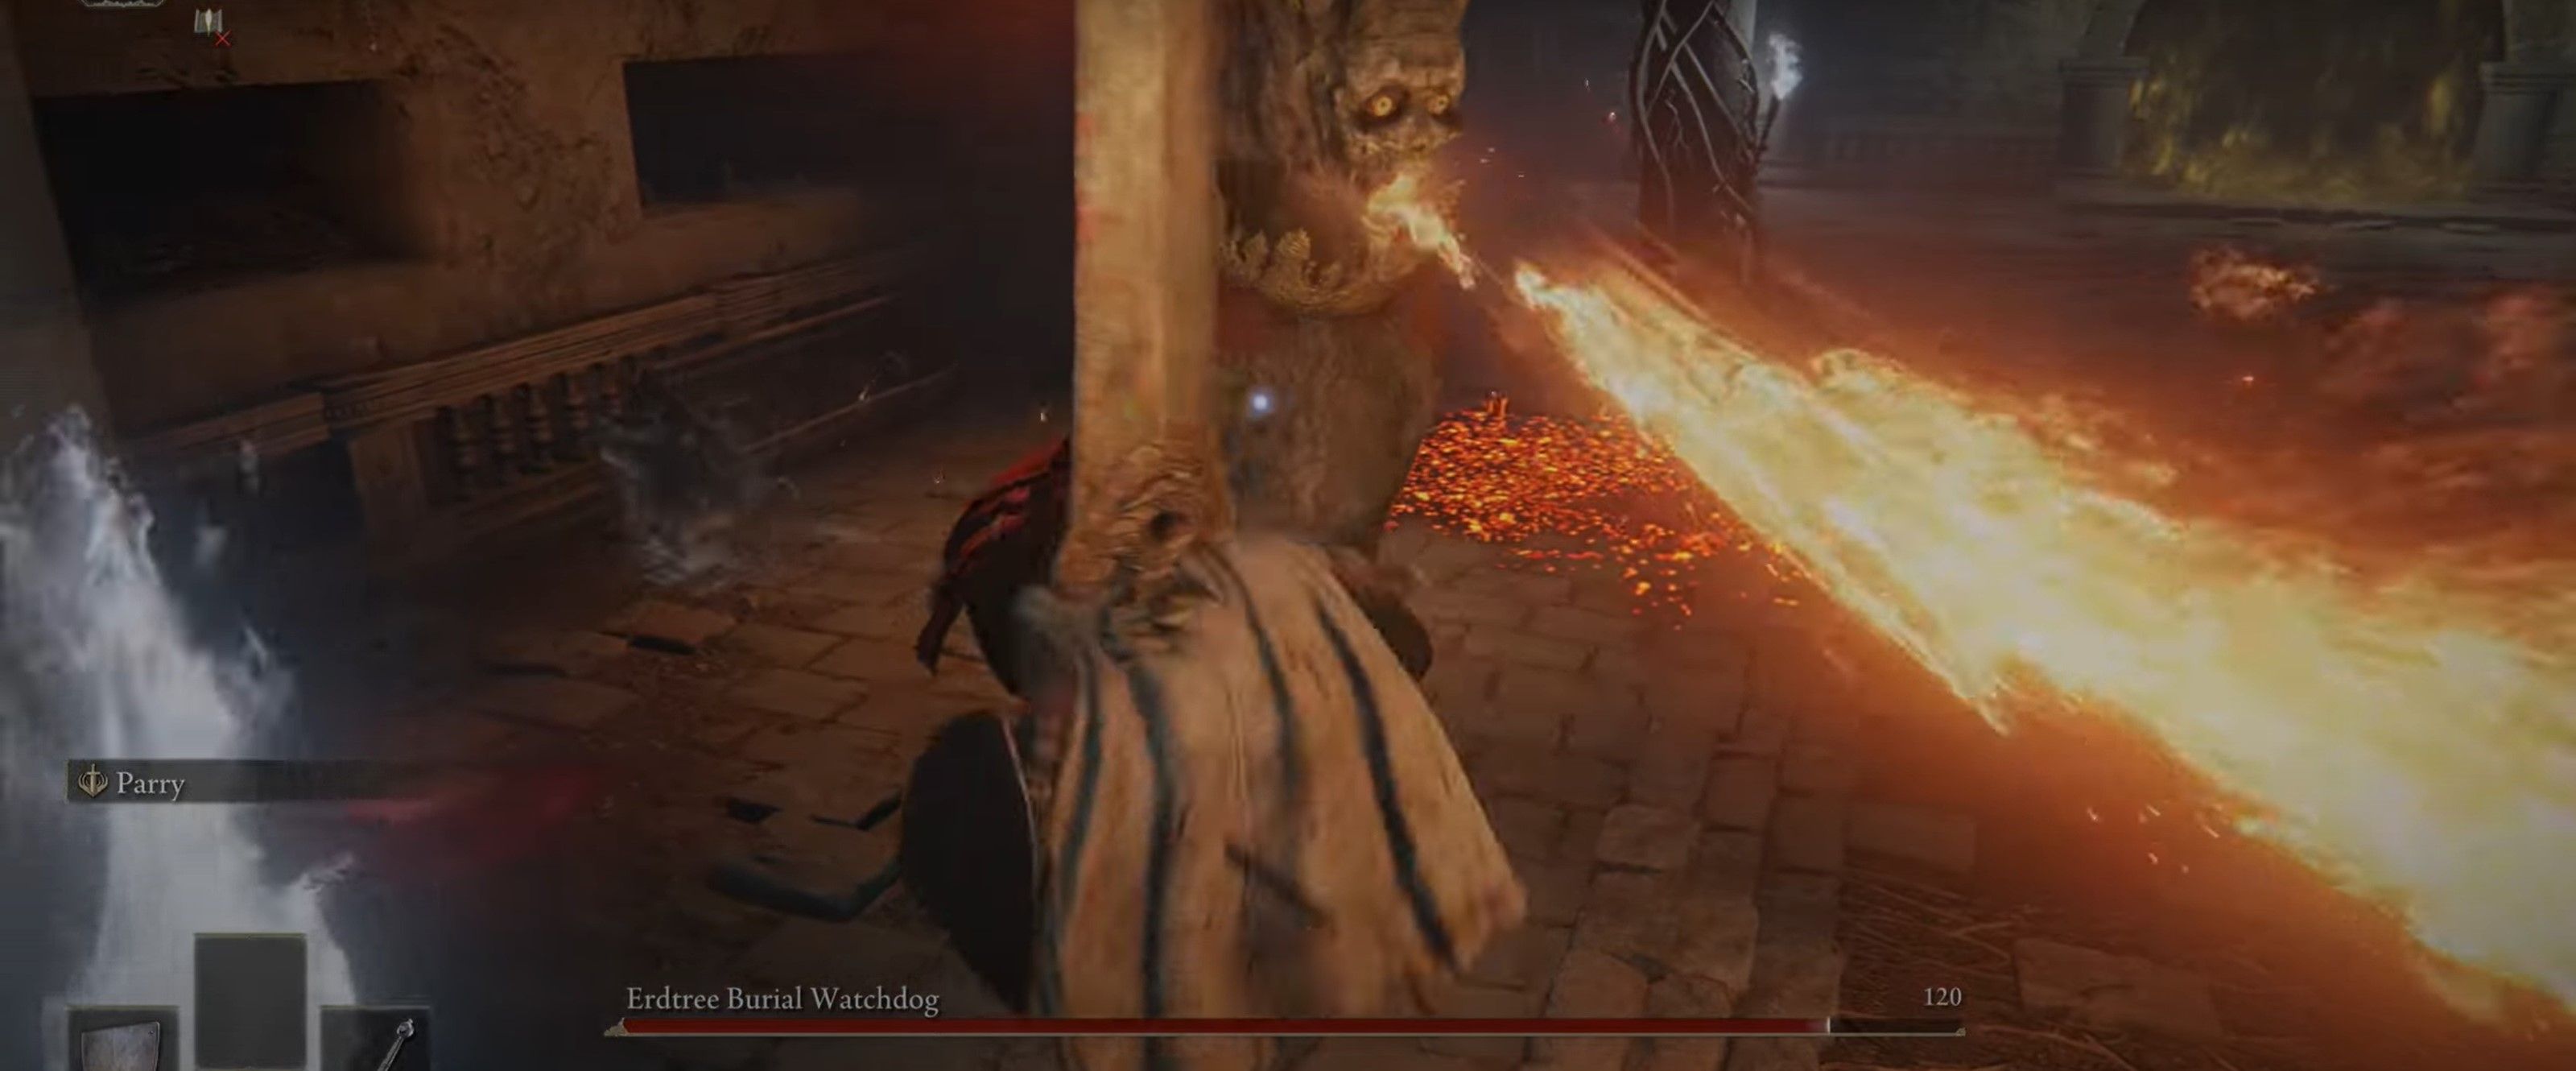 Erdtree Burial Watchdog (Sword)'s fire breath attack